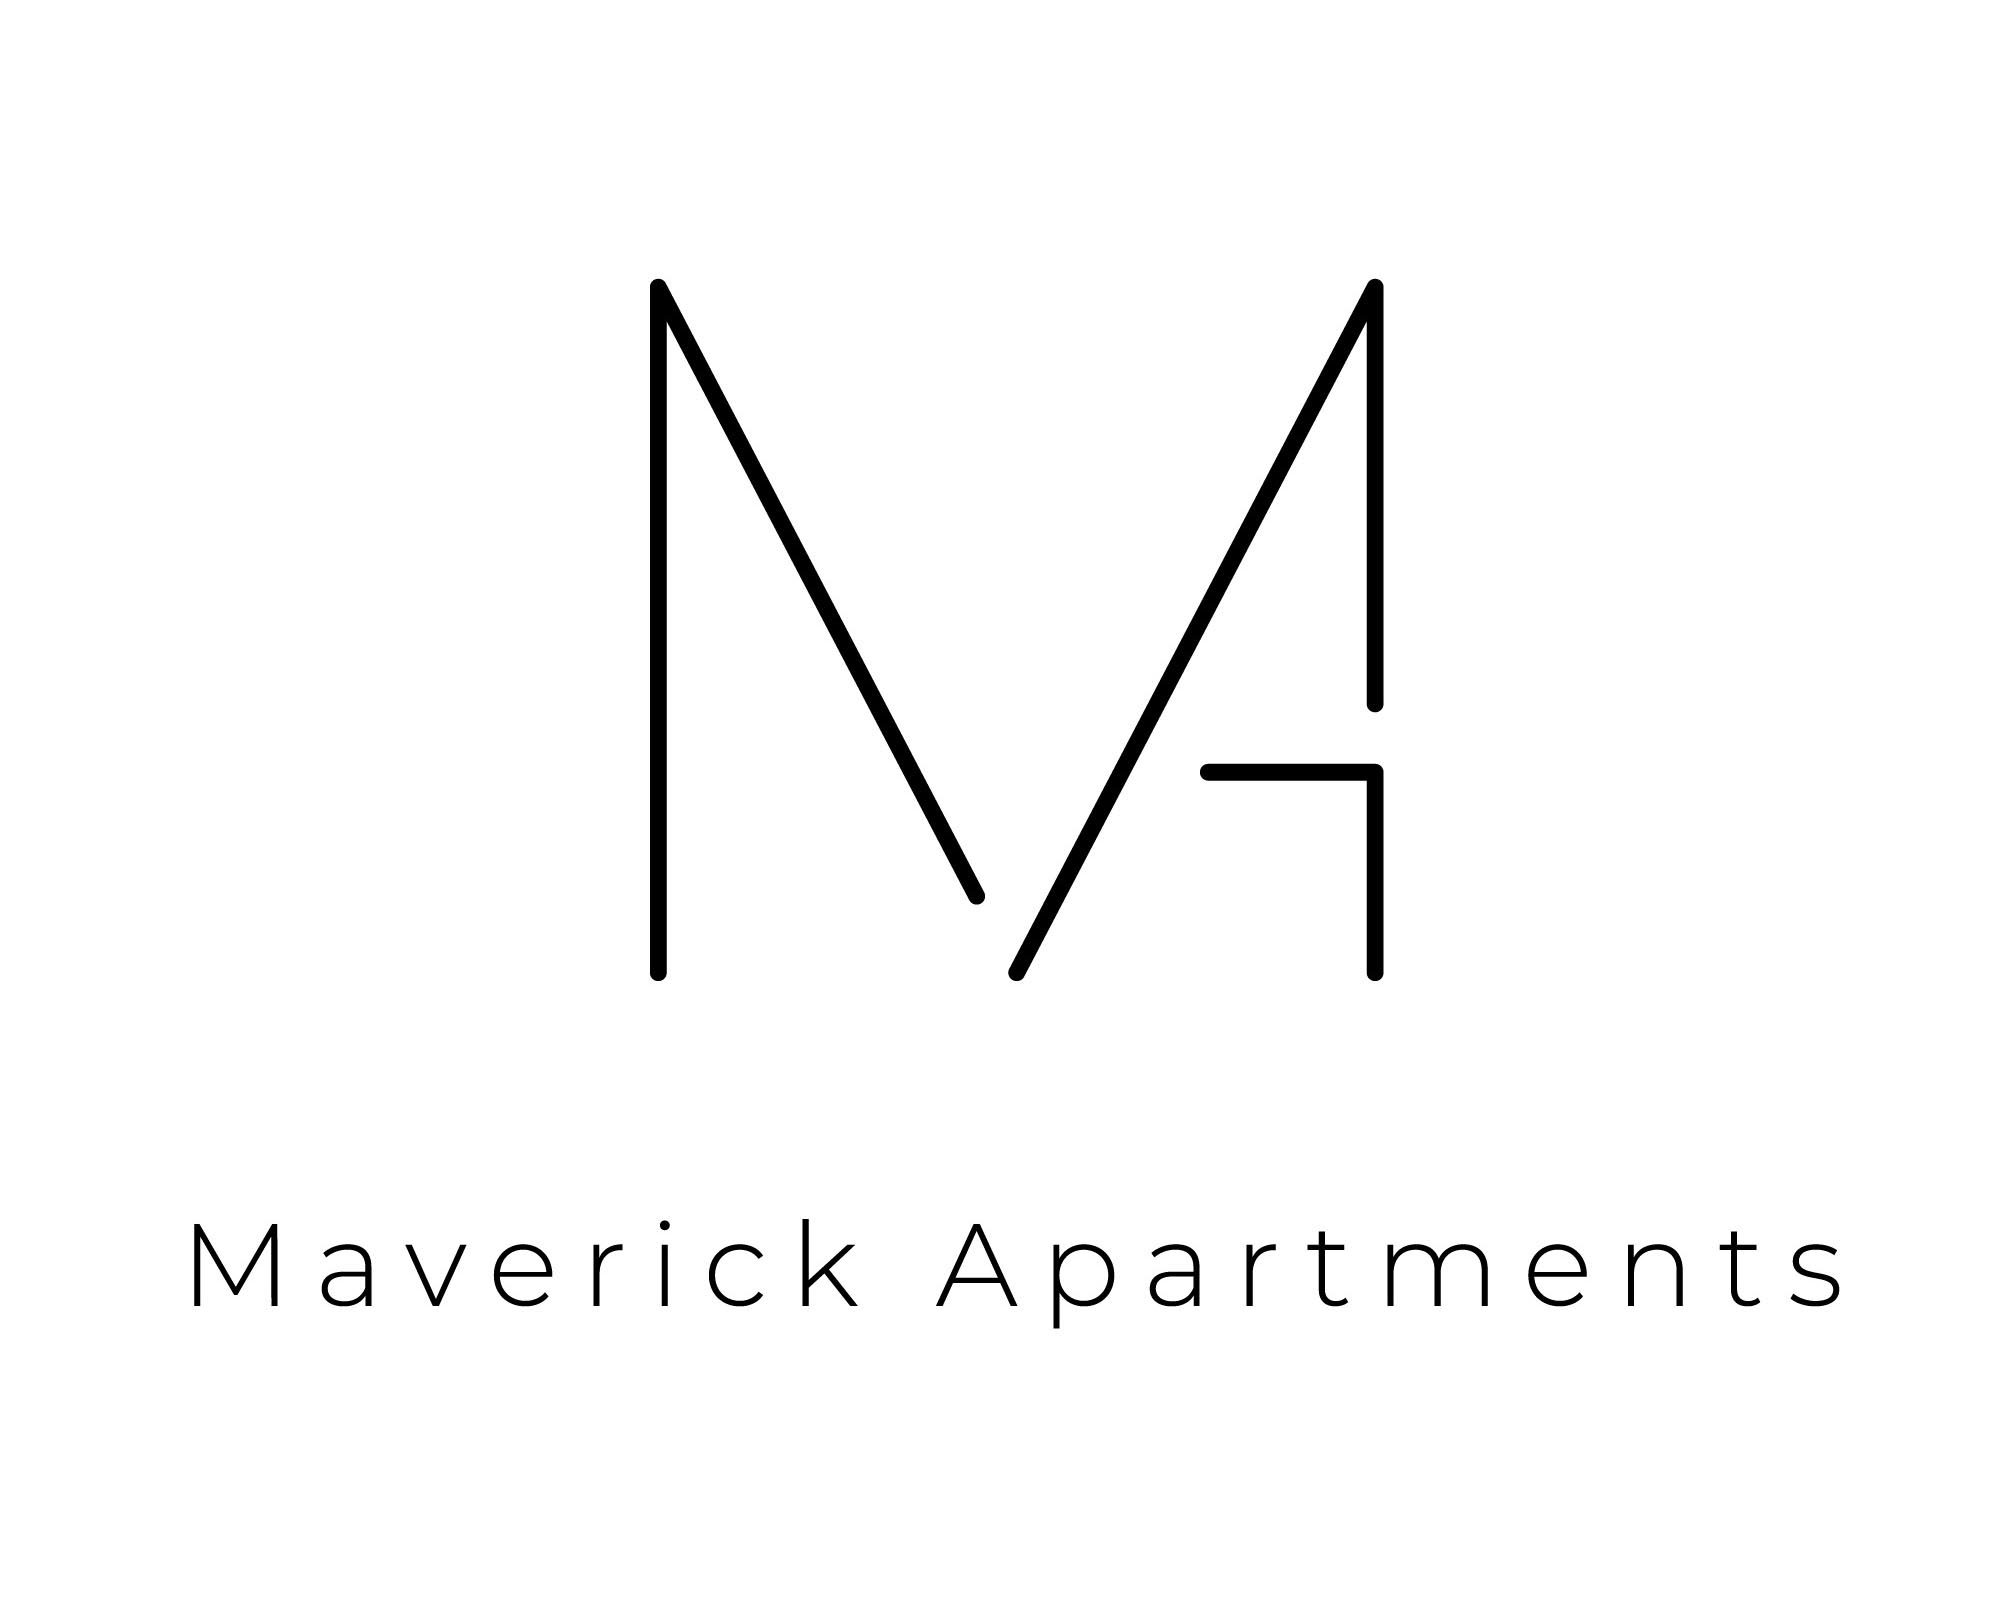 Maverick Apartments